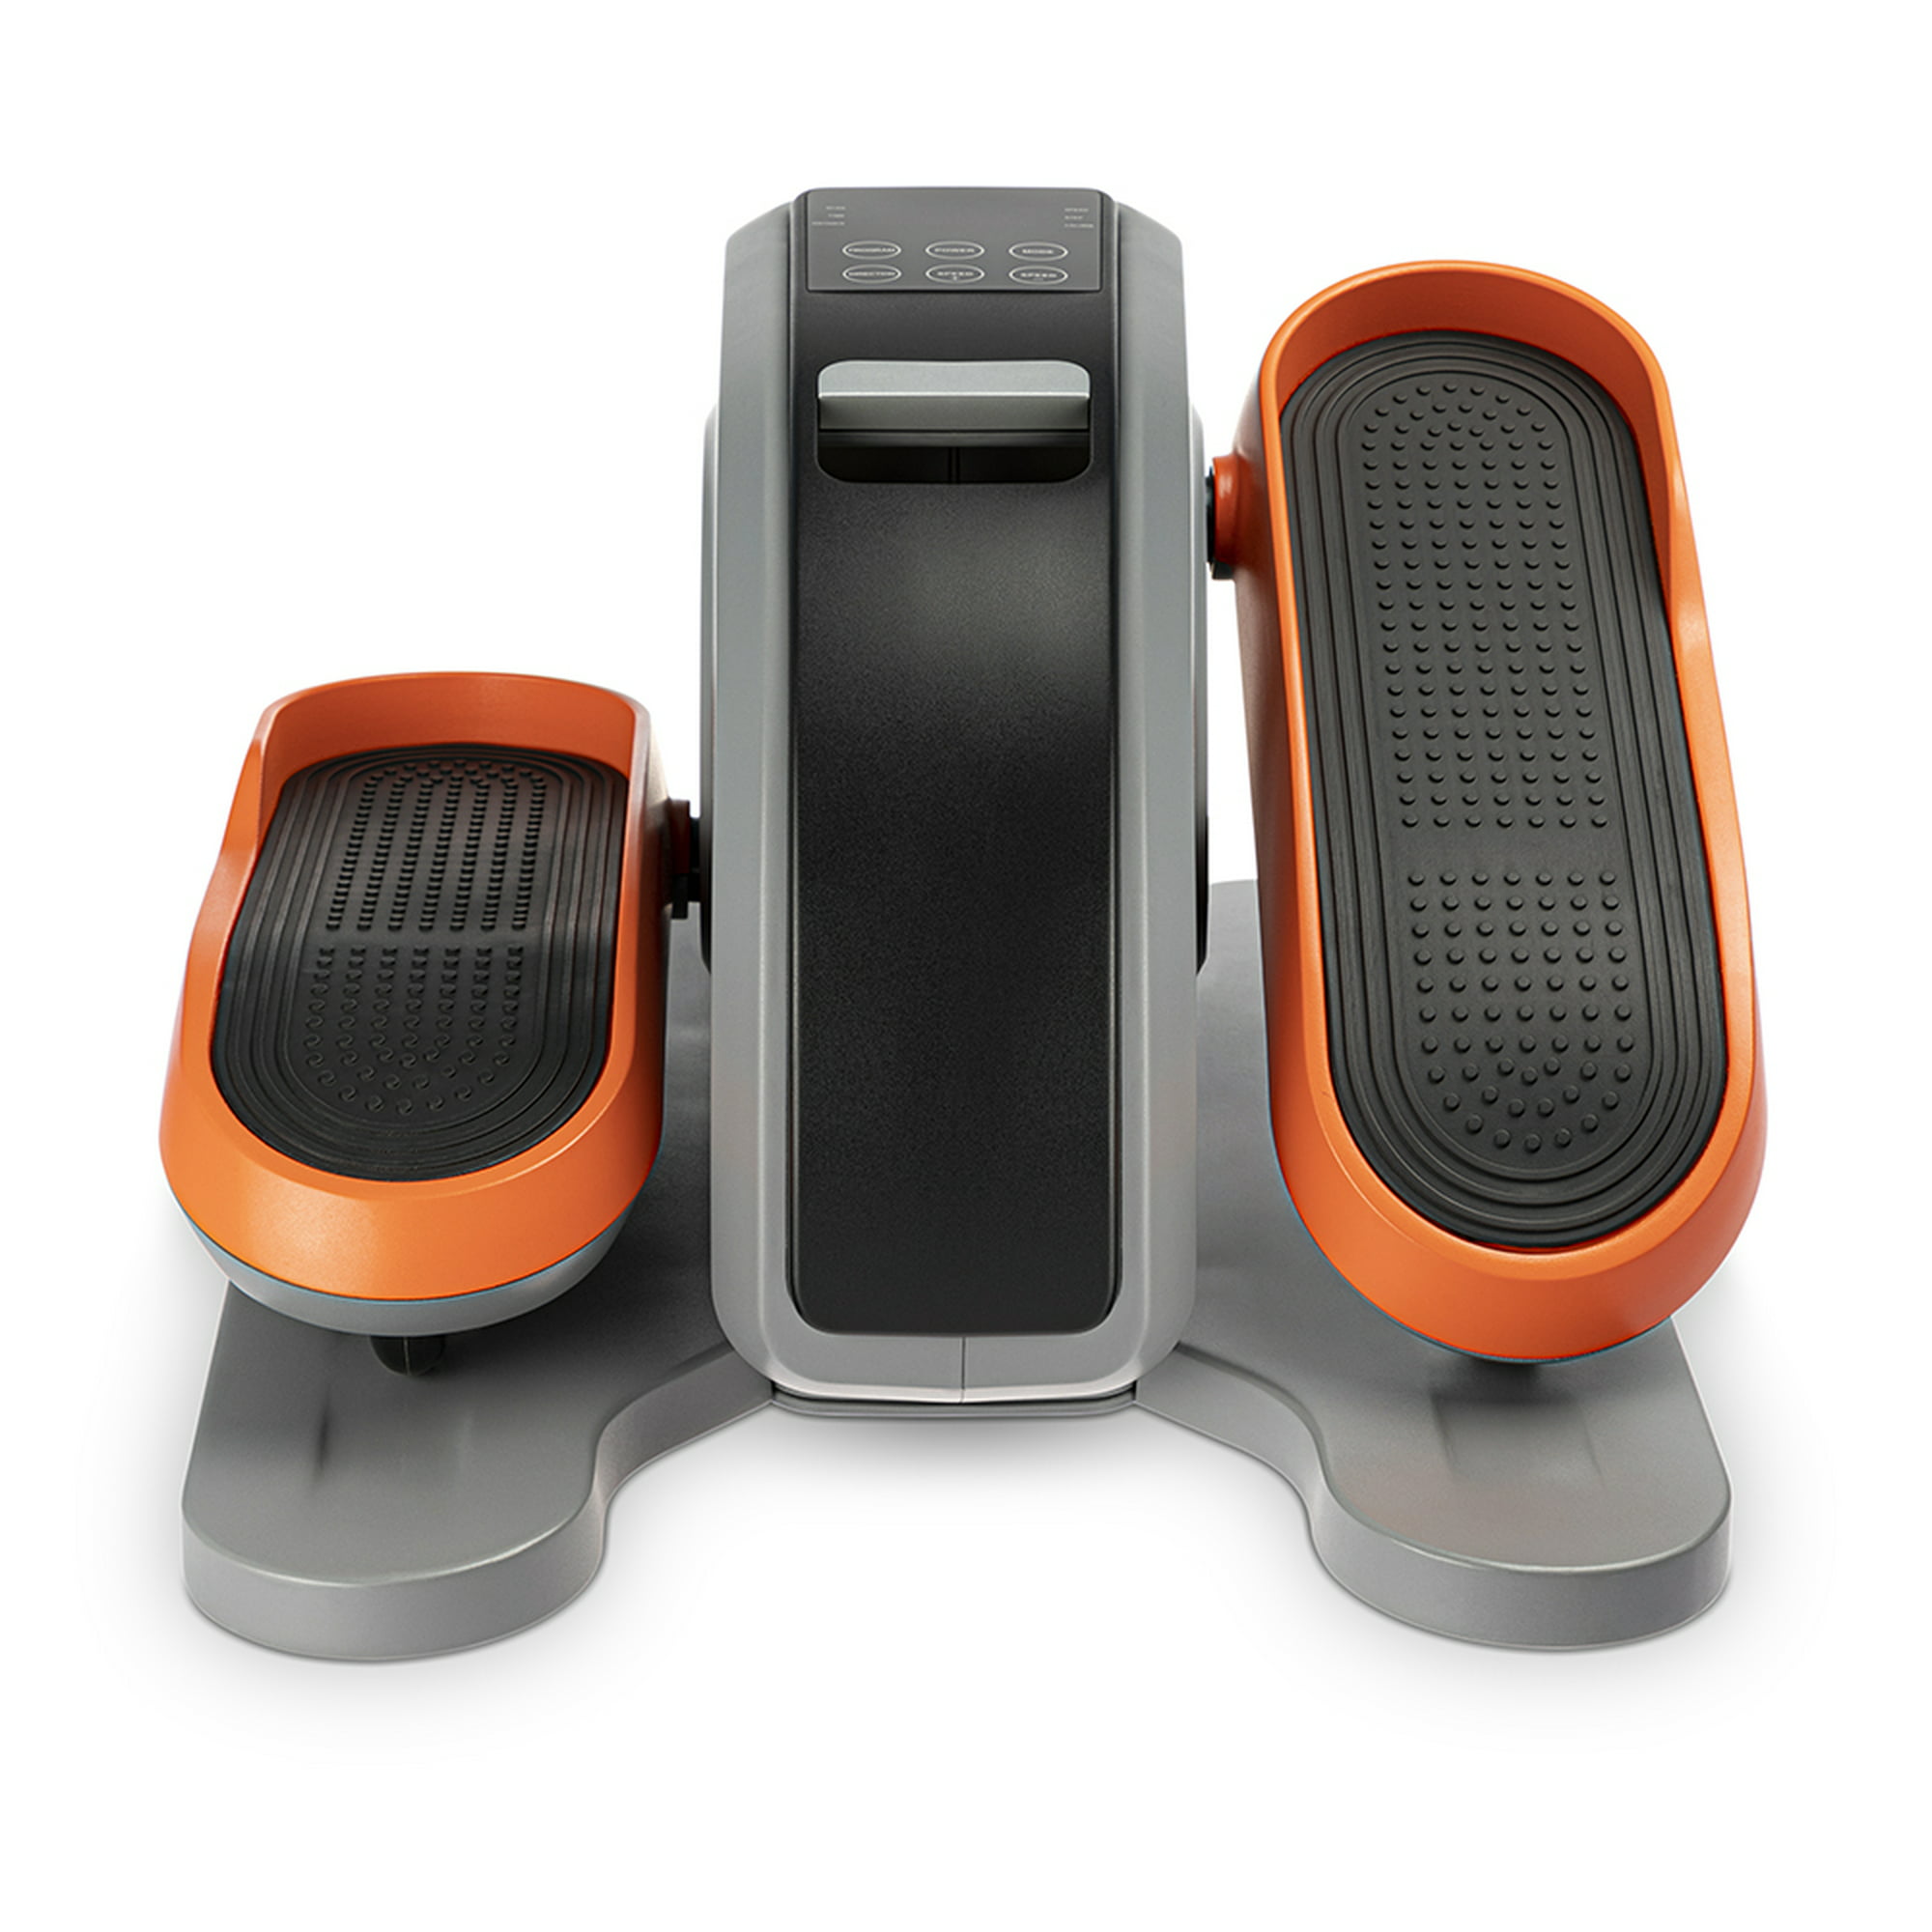 Pack Power Legs + Eliptic Trainer Mini Elíptica Eléctrica